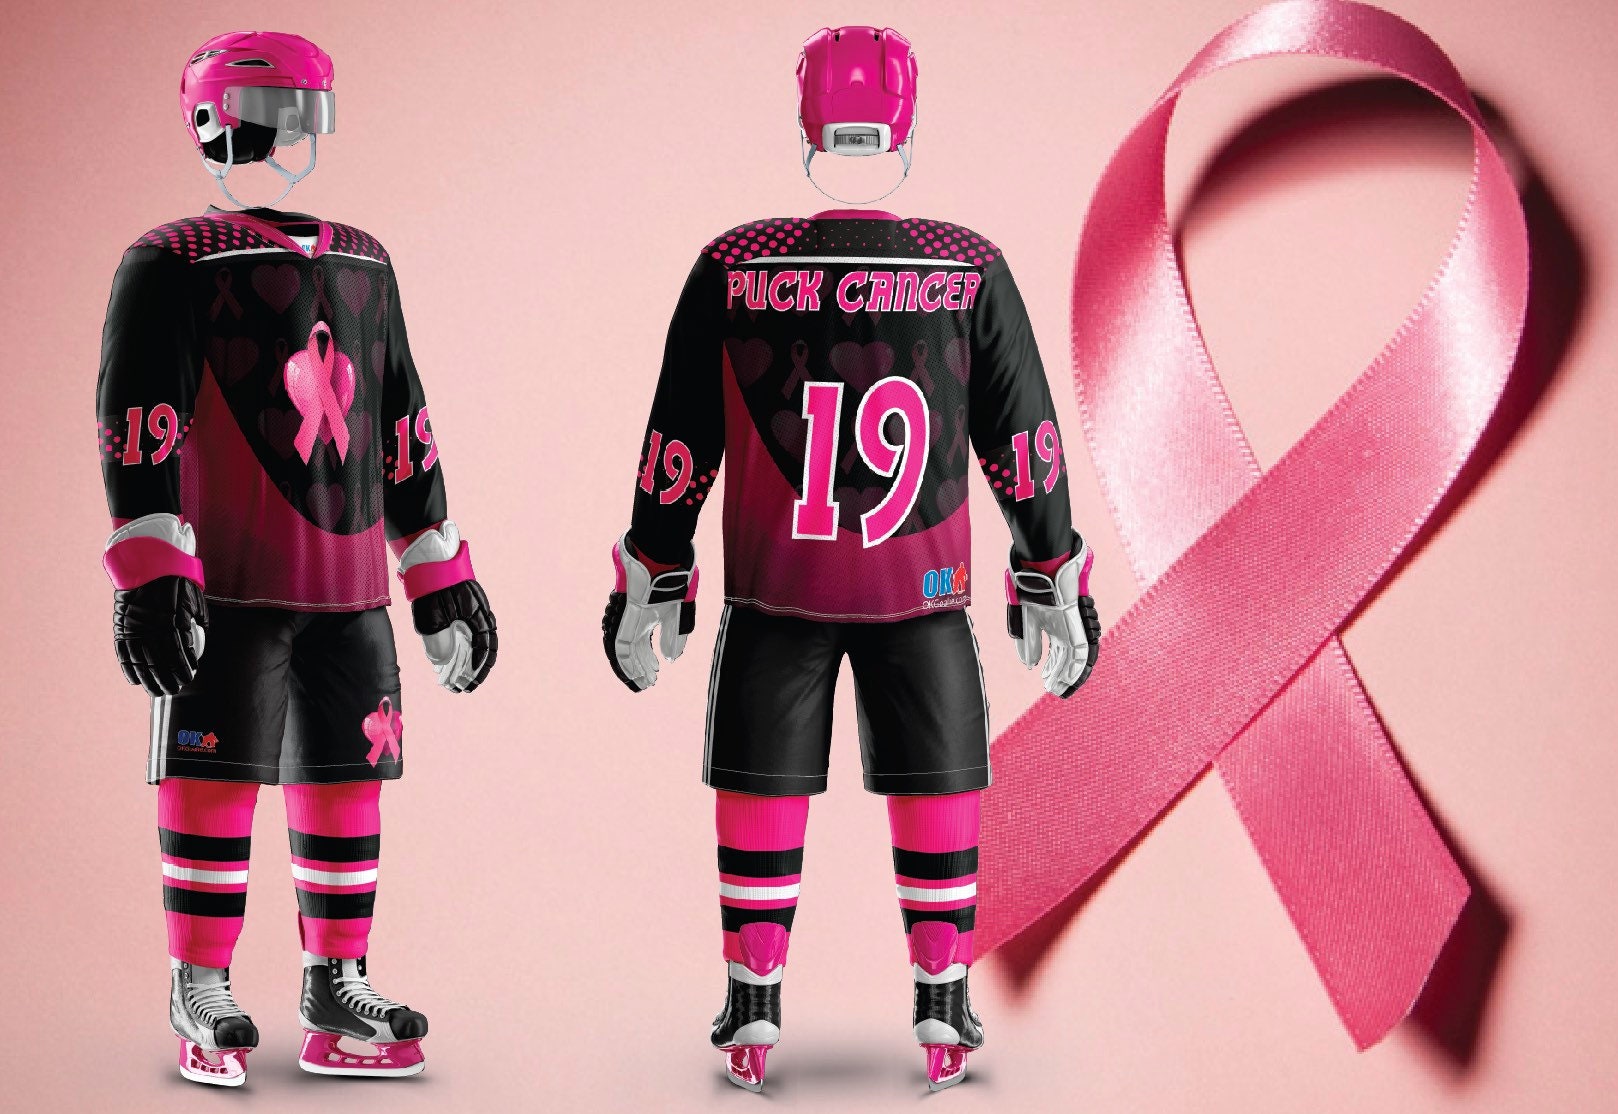 Anaheim Ducks NHL Special Pink Breast Cancer Hockey Jersey Long Sleeve -  Growkoc